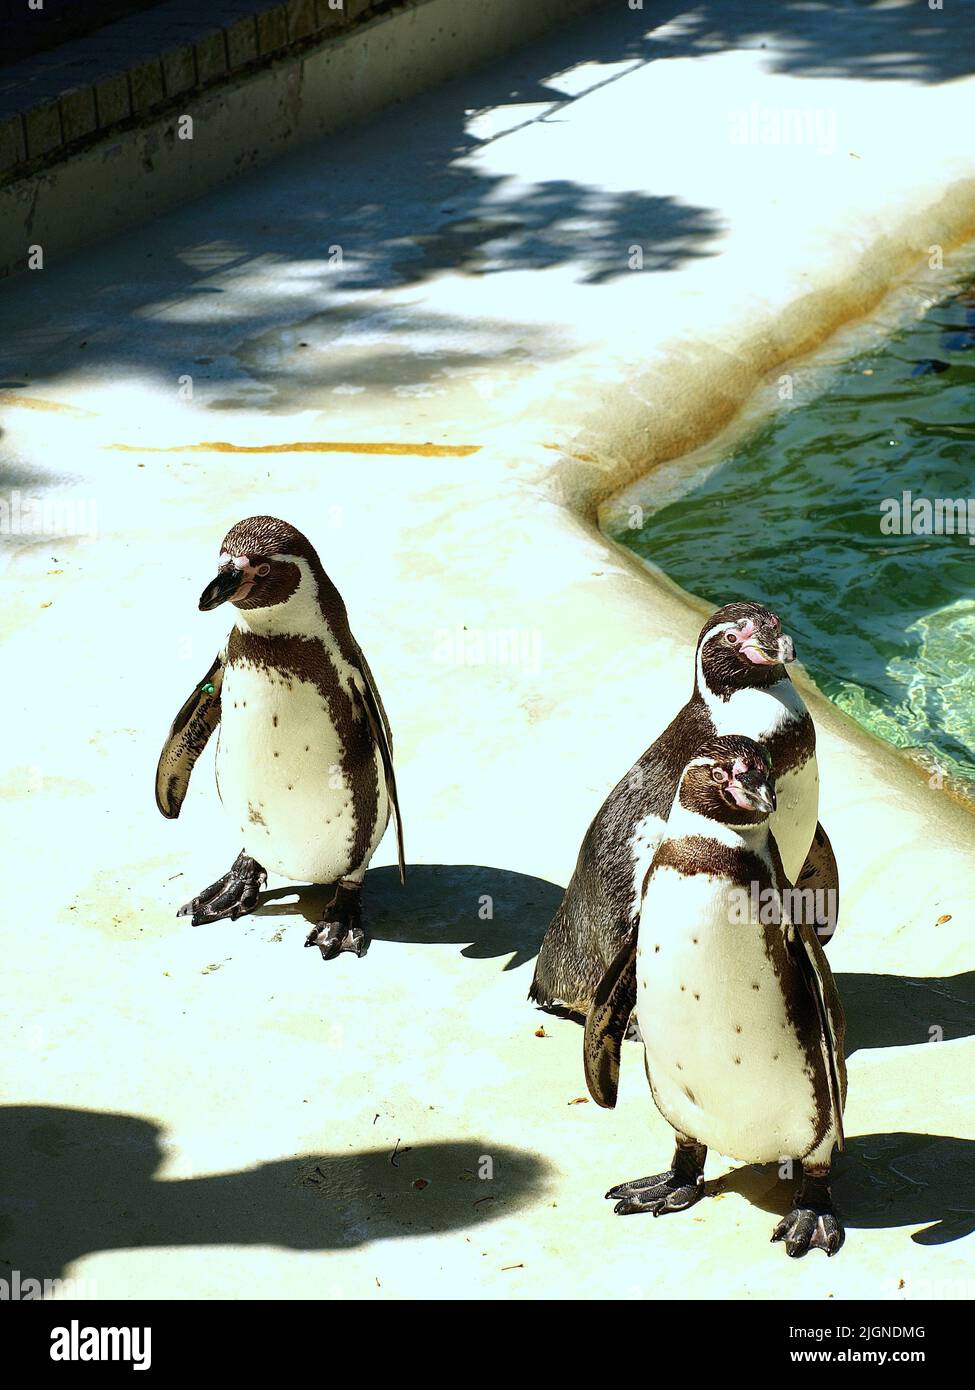 Pingüino caliente fotografías e imágenes de alta resolución - Alamy